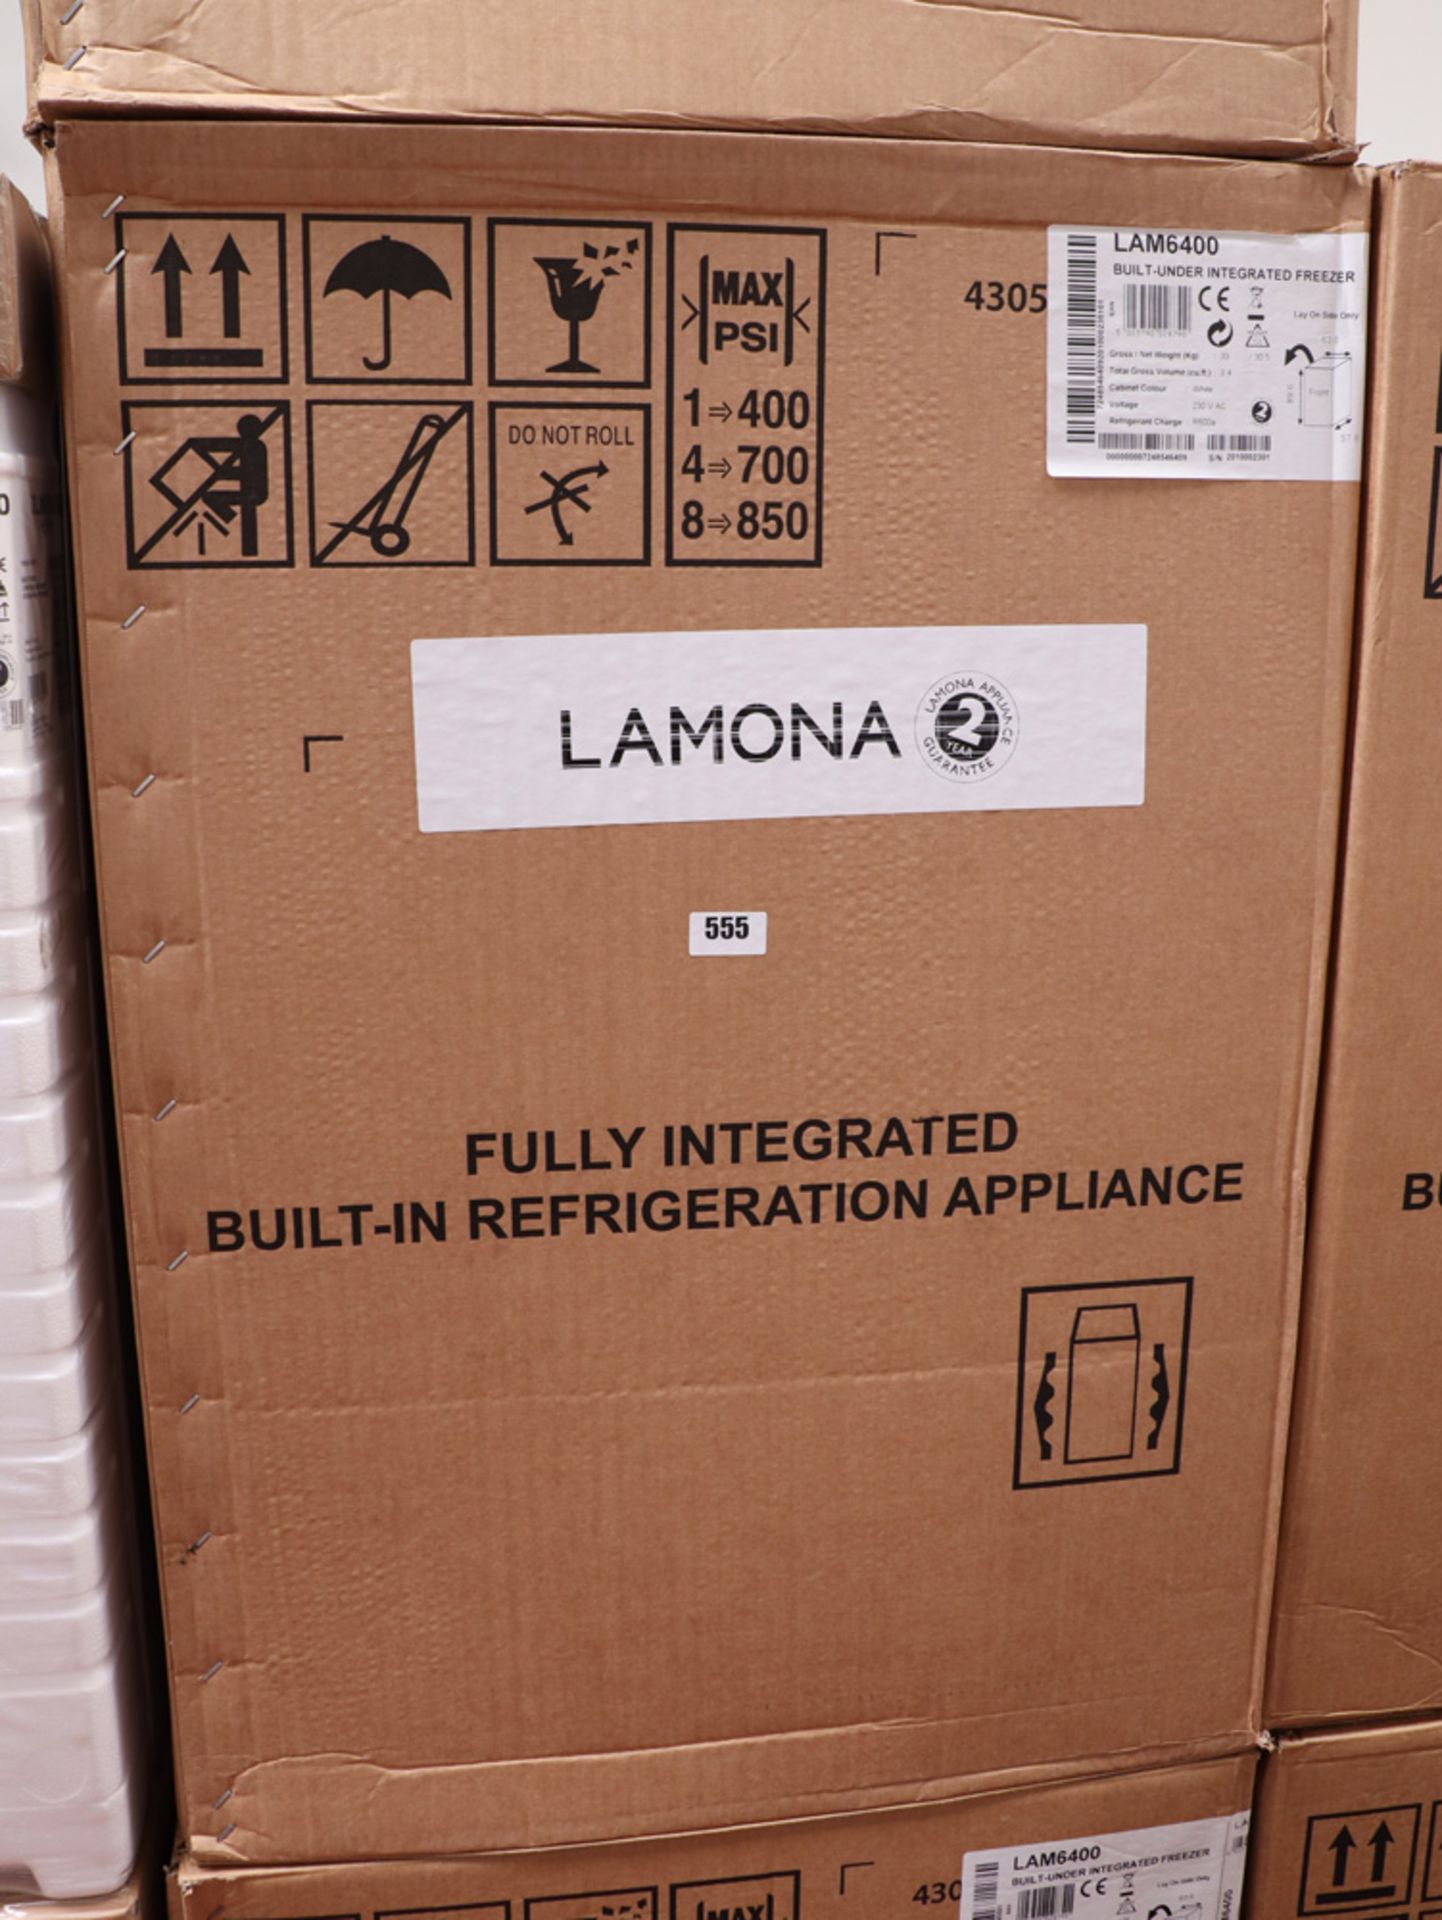 Lamona 6400 built-under integrated freezer